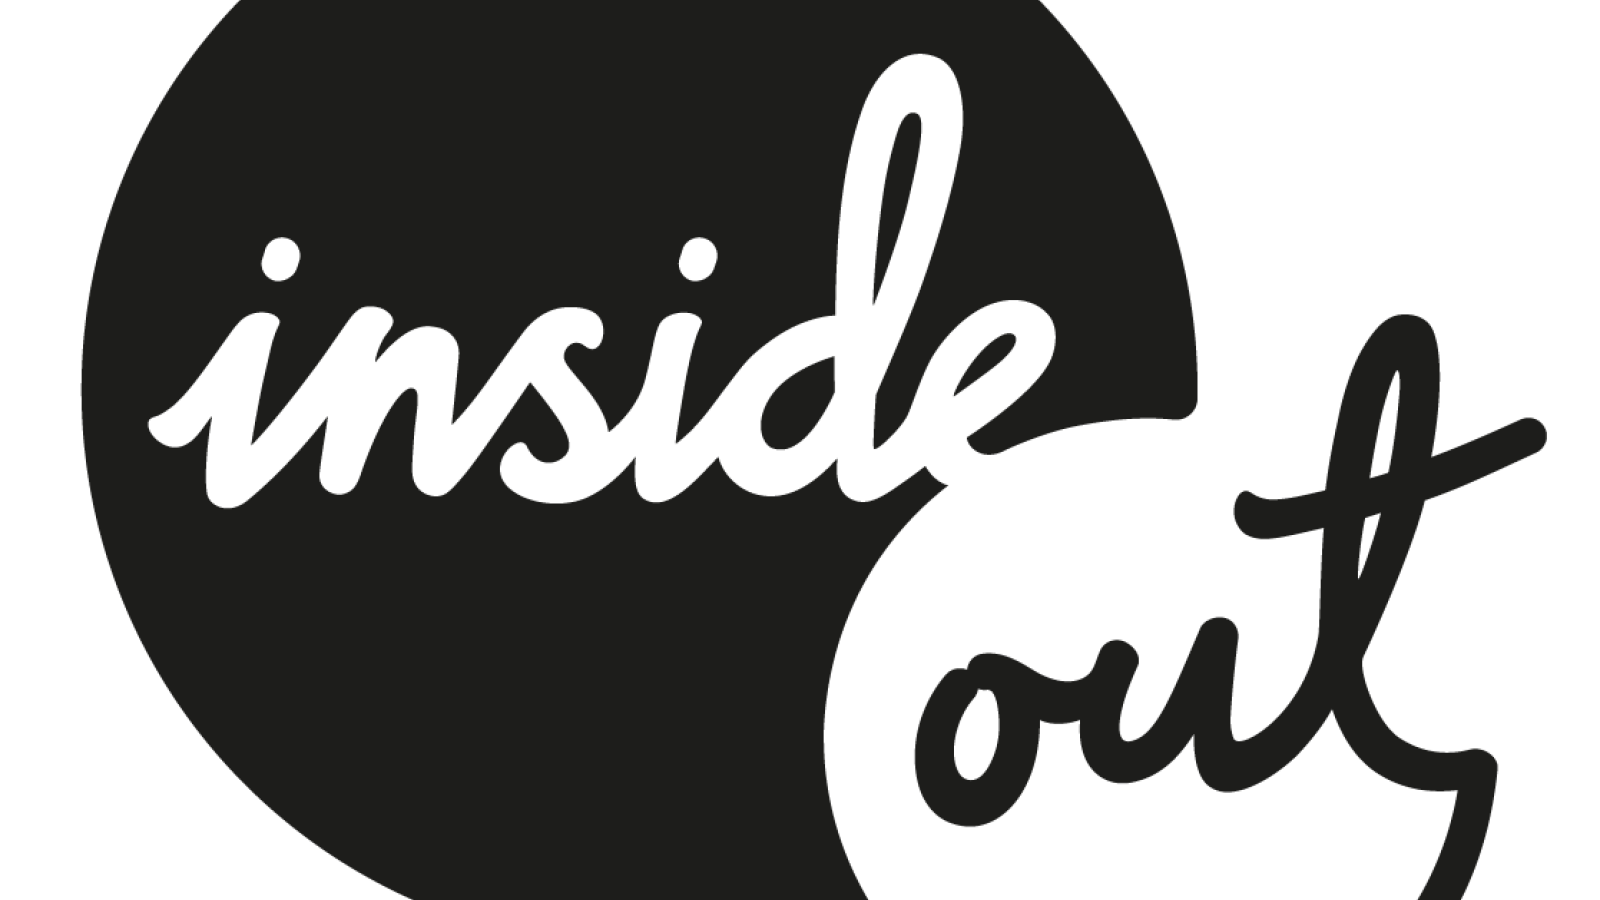 Inside Out logo wcc OVERLAY black CMYK